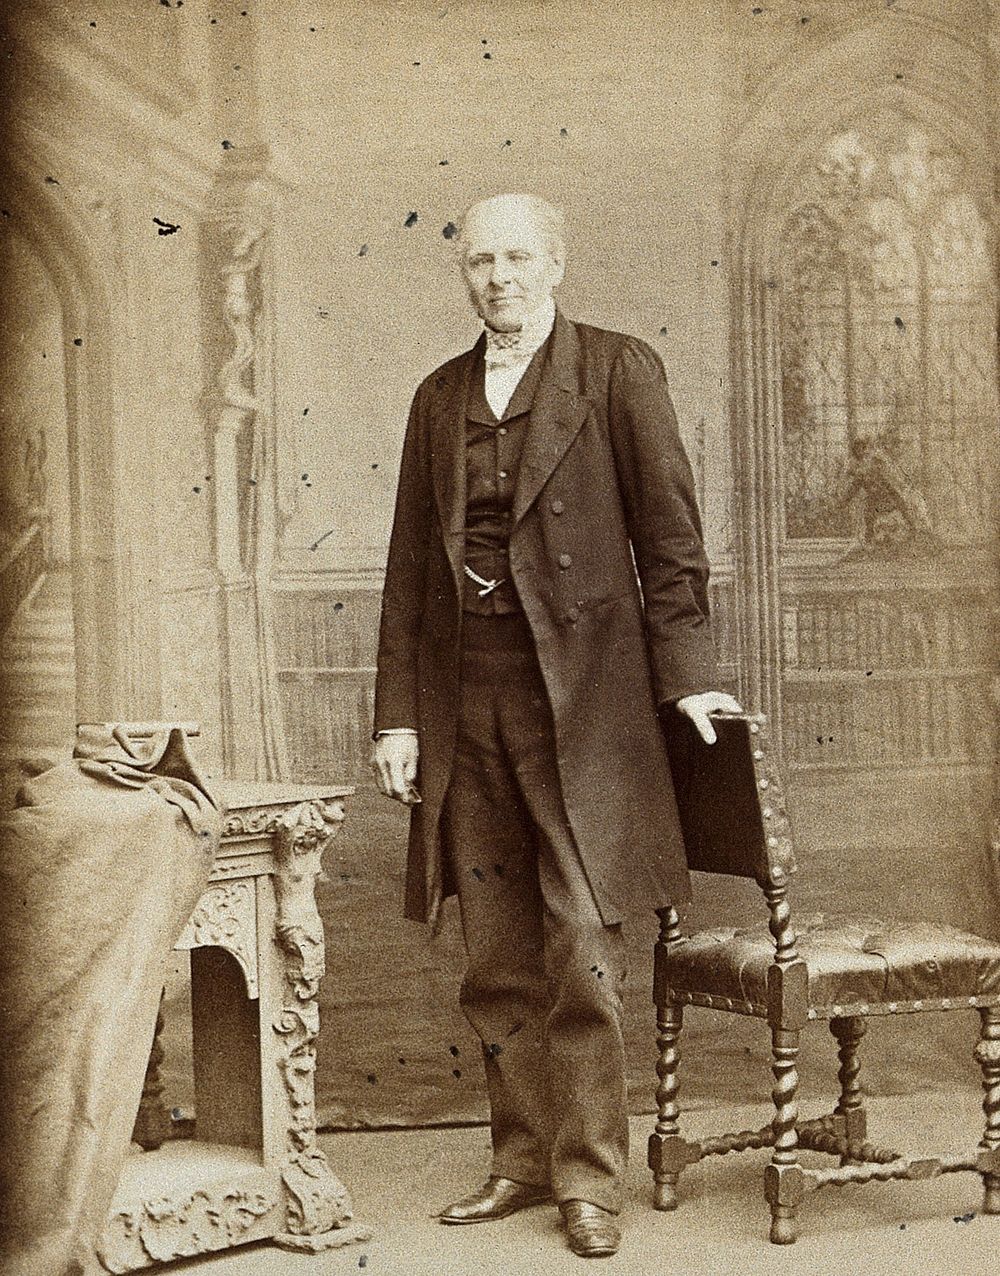 James Luke. Photograph by Ernest Edwards, 1867.